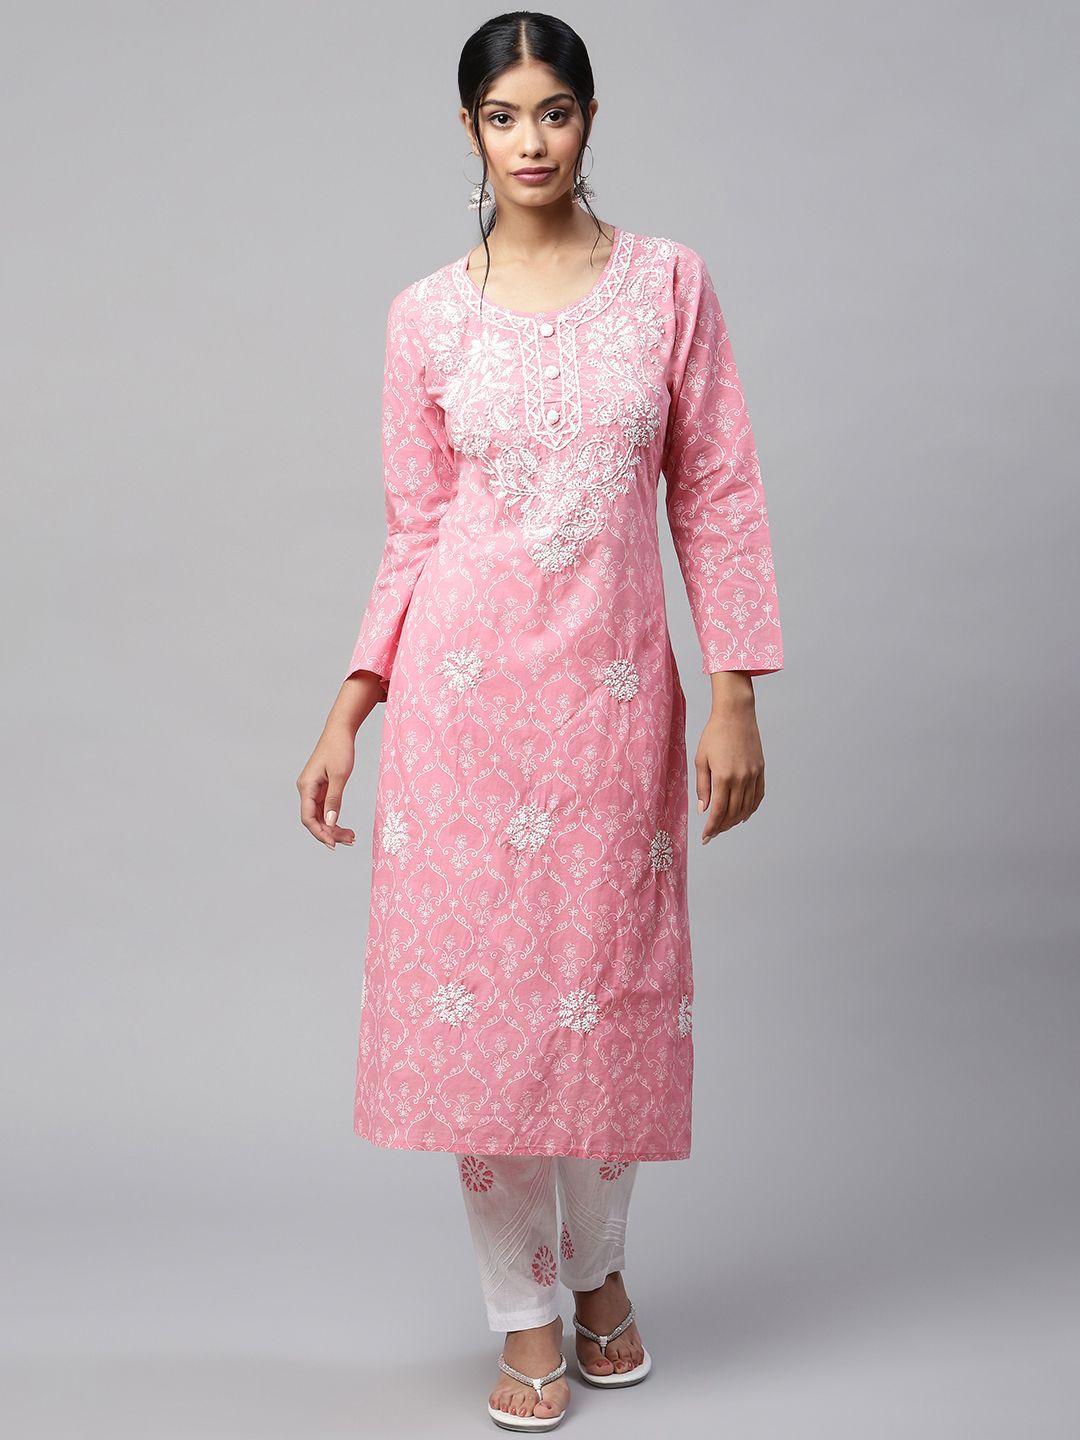 readiprint fashions women pink floral embroidery chikankari cotton straight kurta palazzos